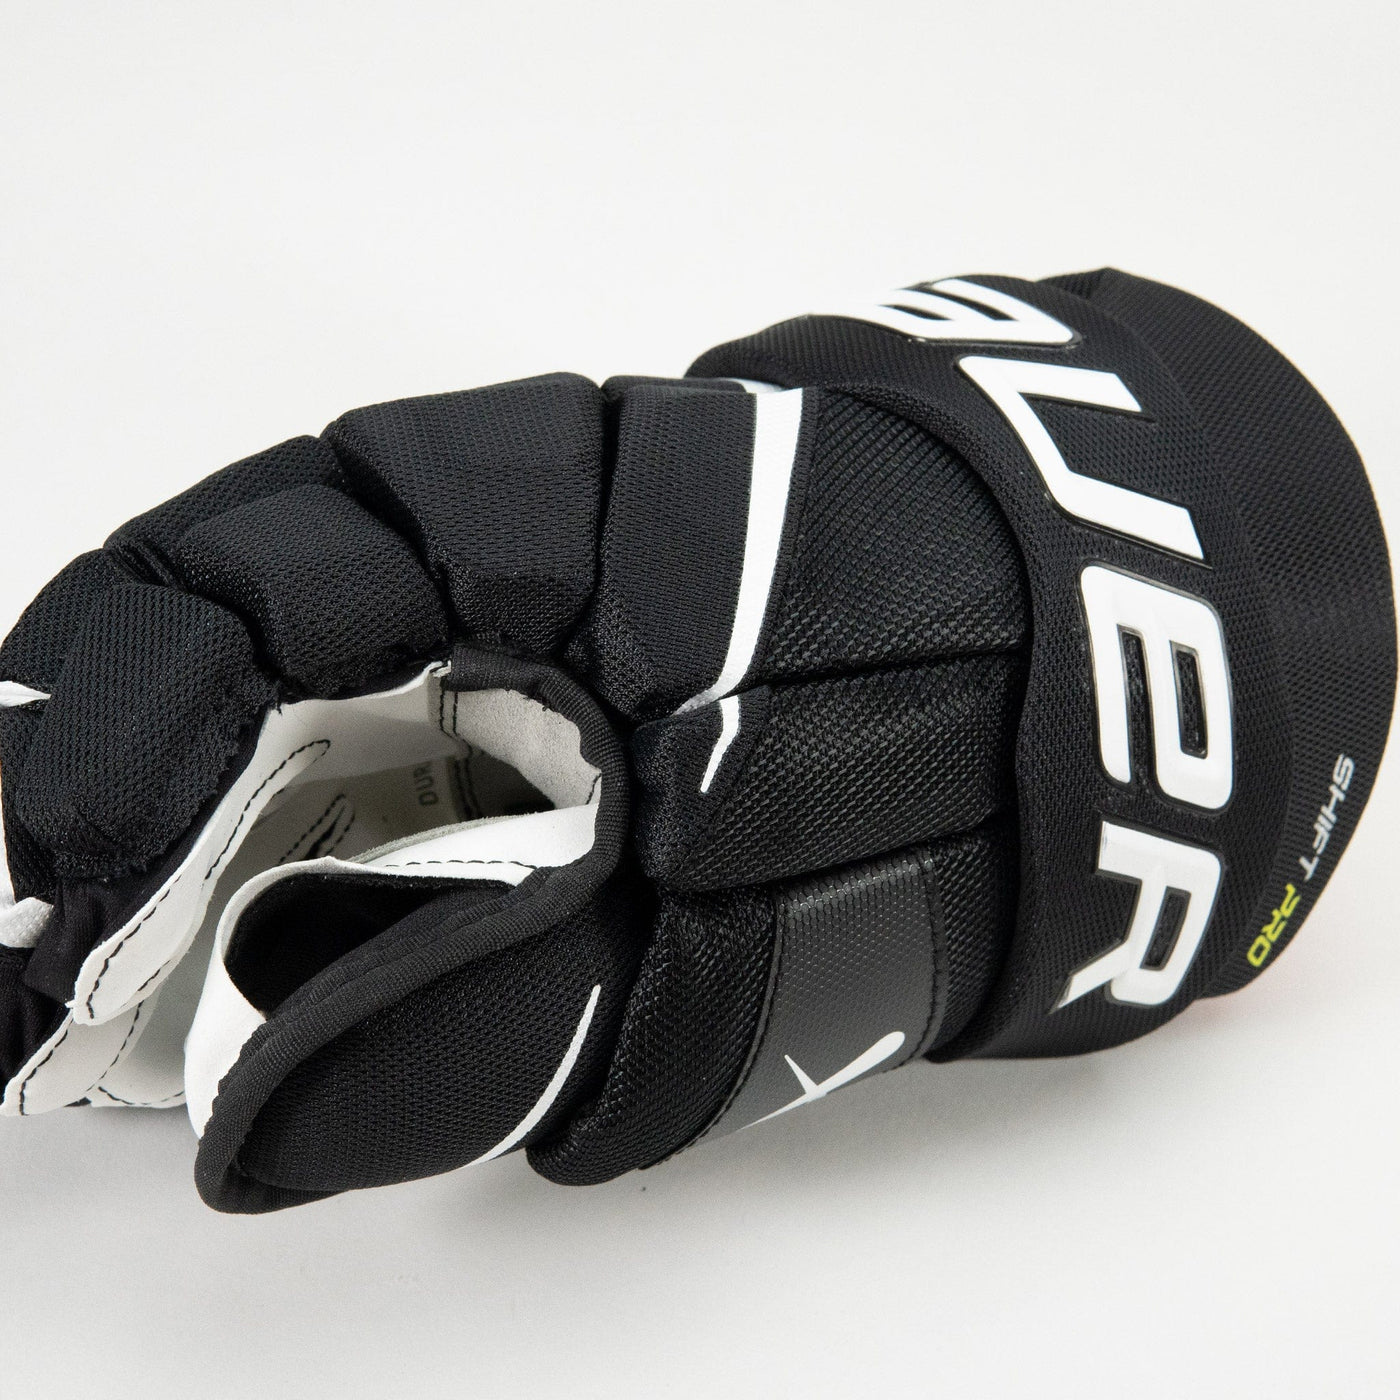 Bauer Vapor Shift Pro Senior Hockey Gloves - The Hockey Shop Source For Sports